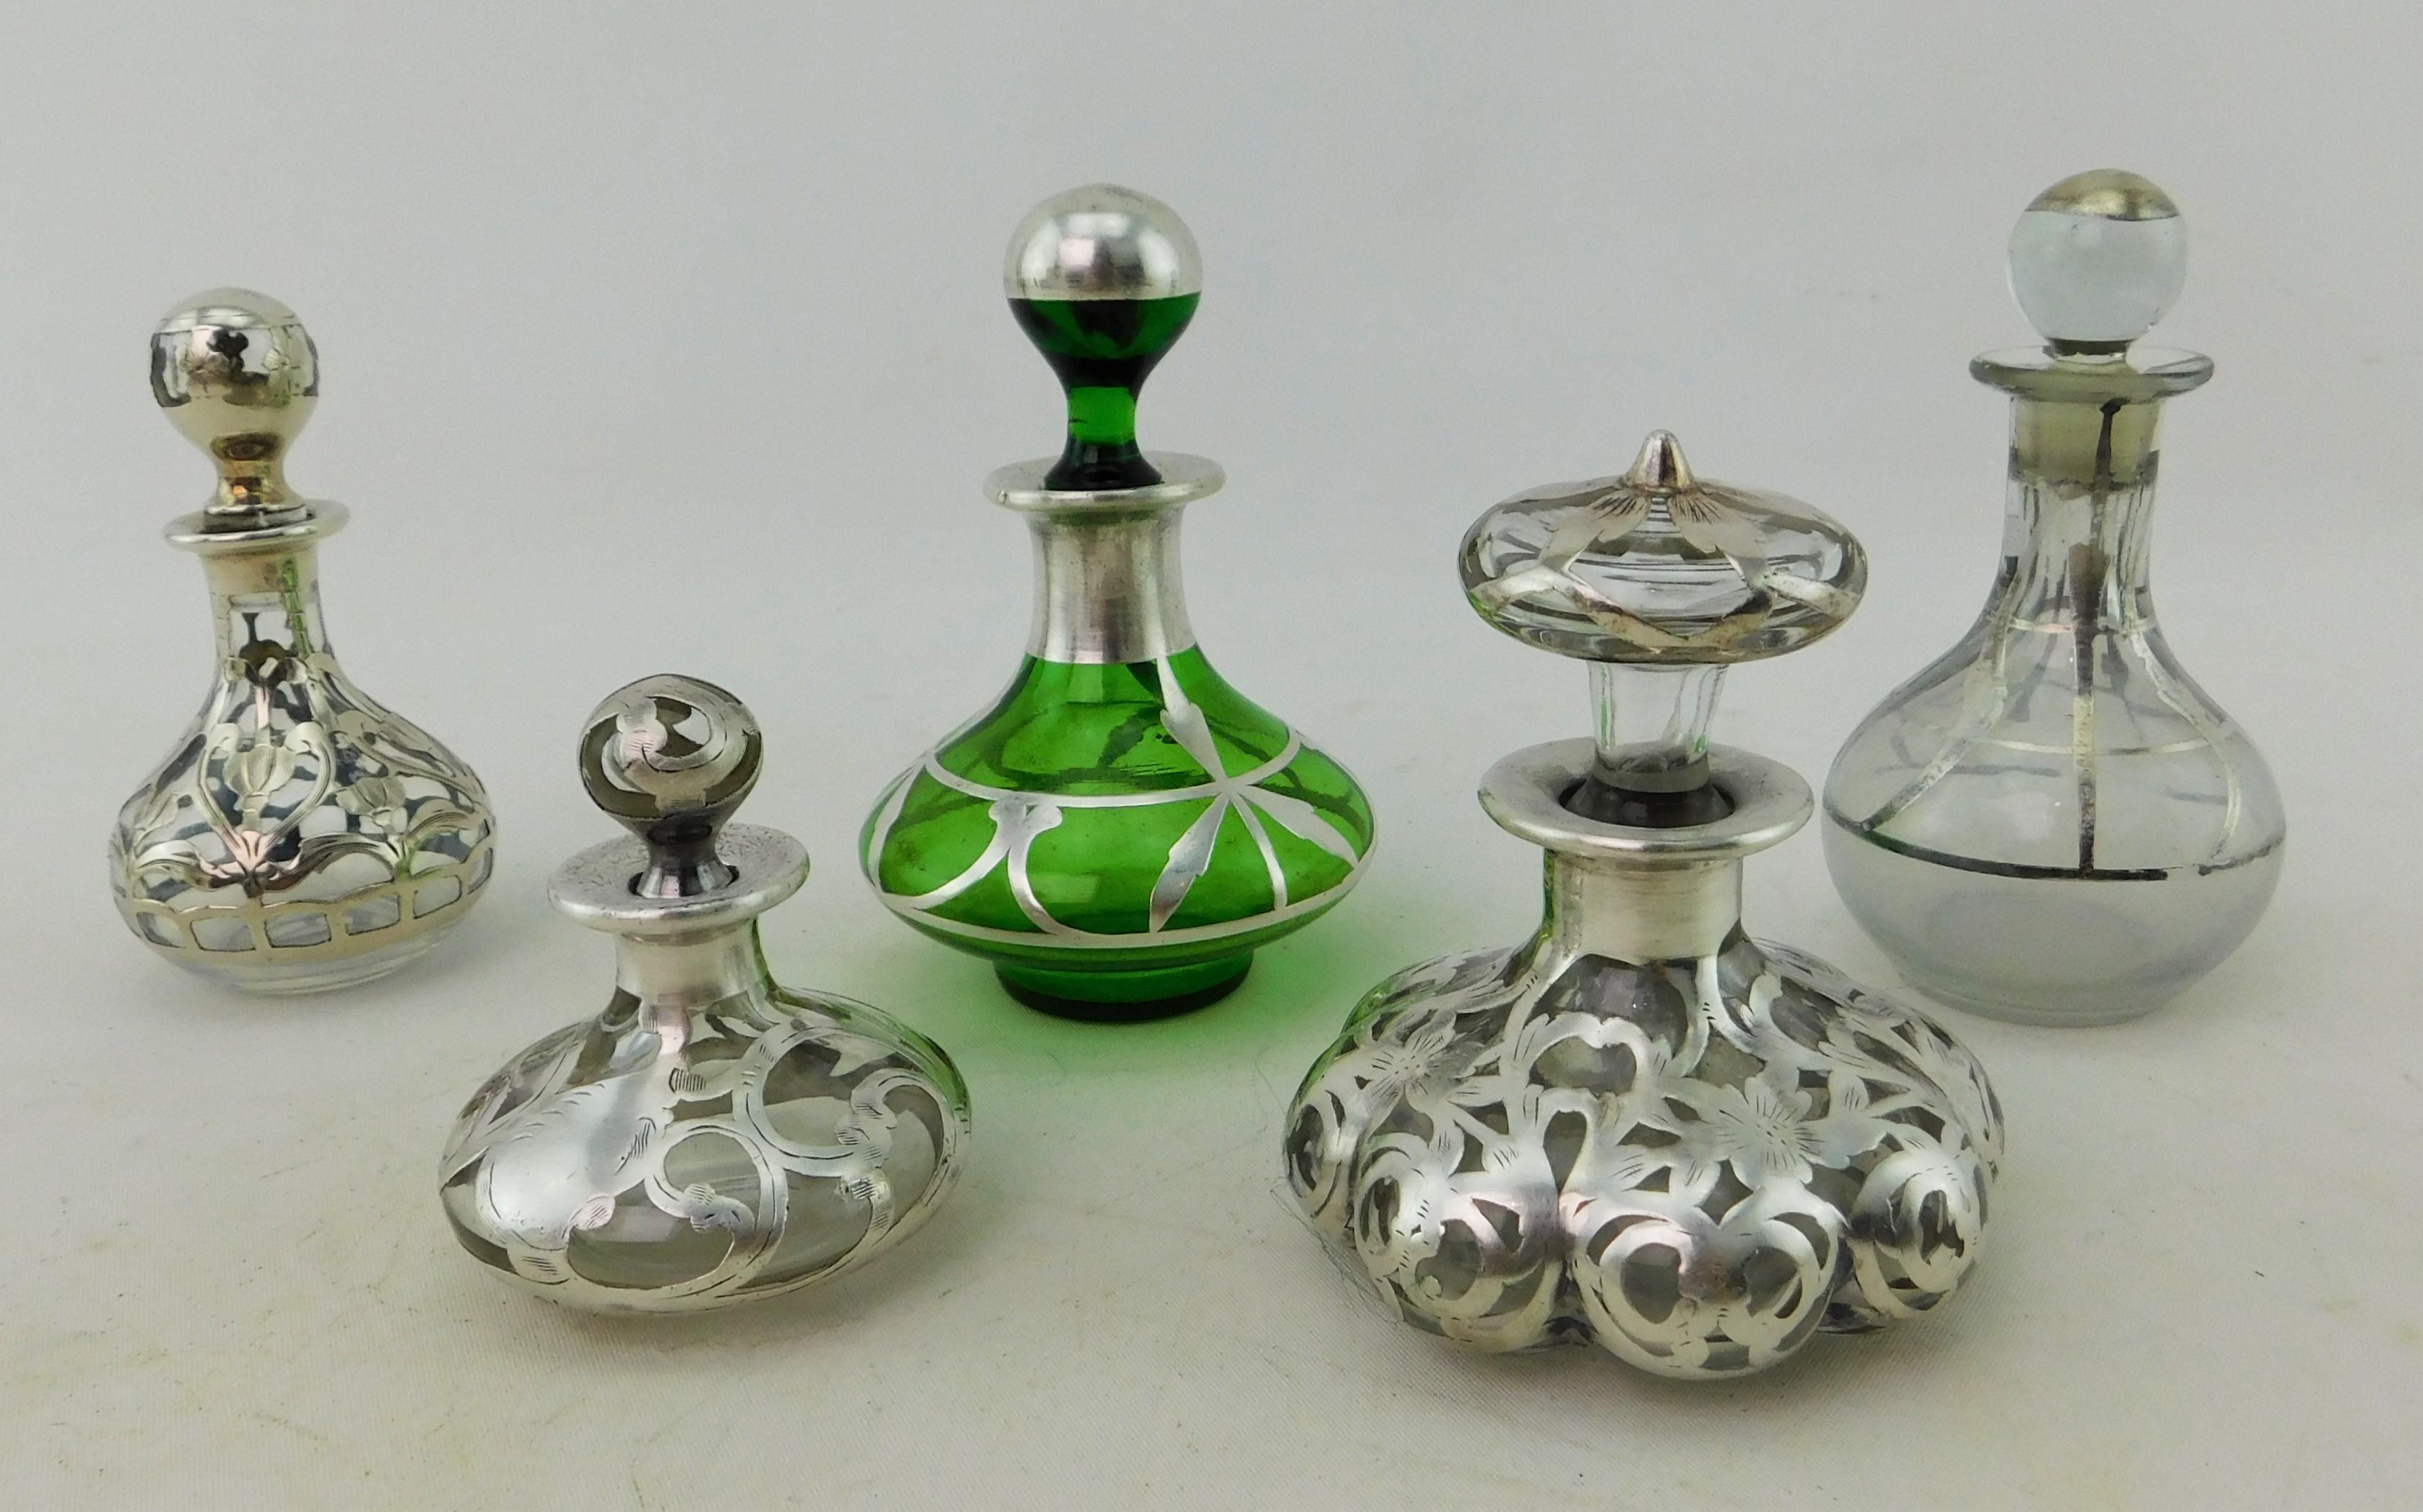 European Five Art Nouveau Perfume Bottles circa 1900 Silver Overlay on Glass 19th Century For Sale